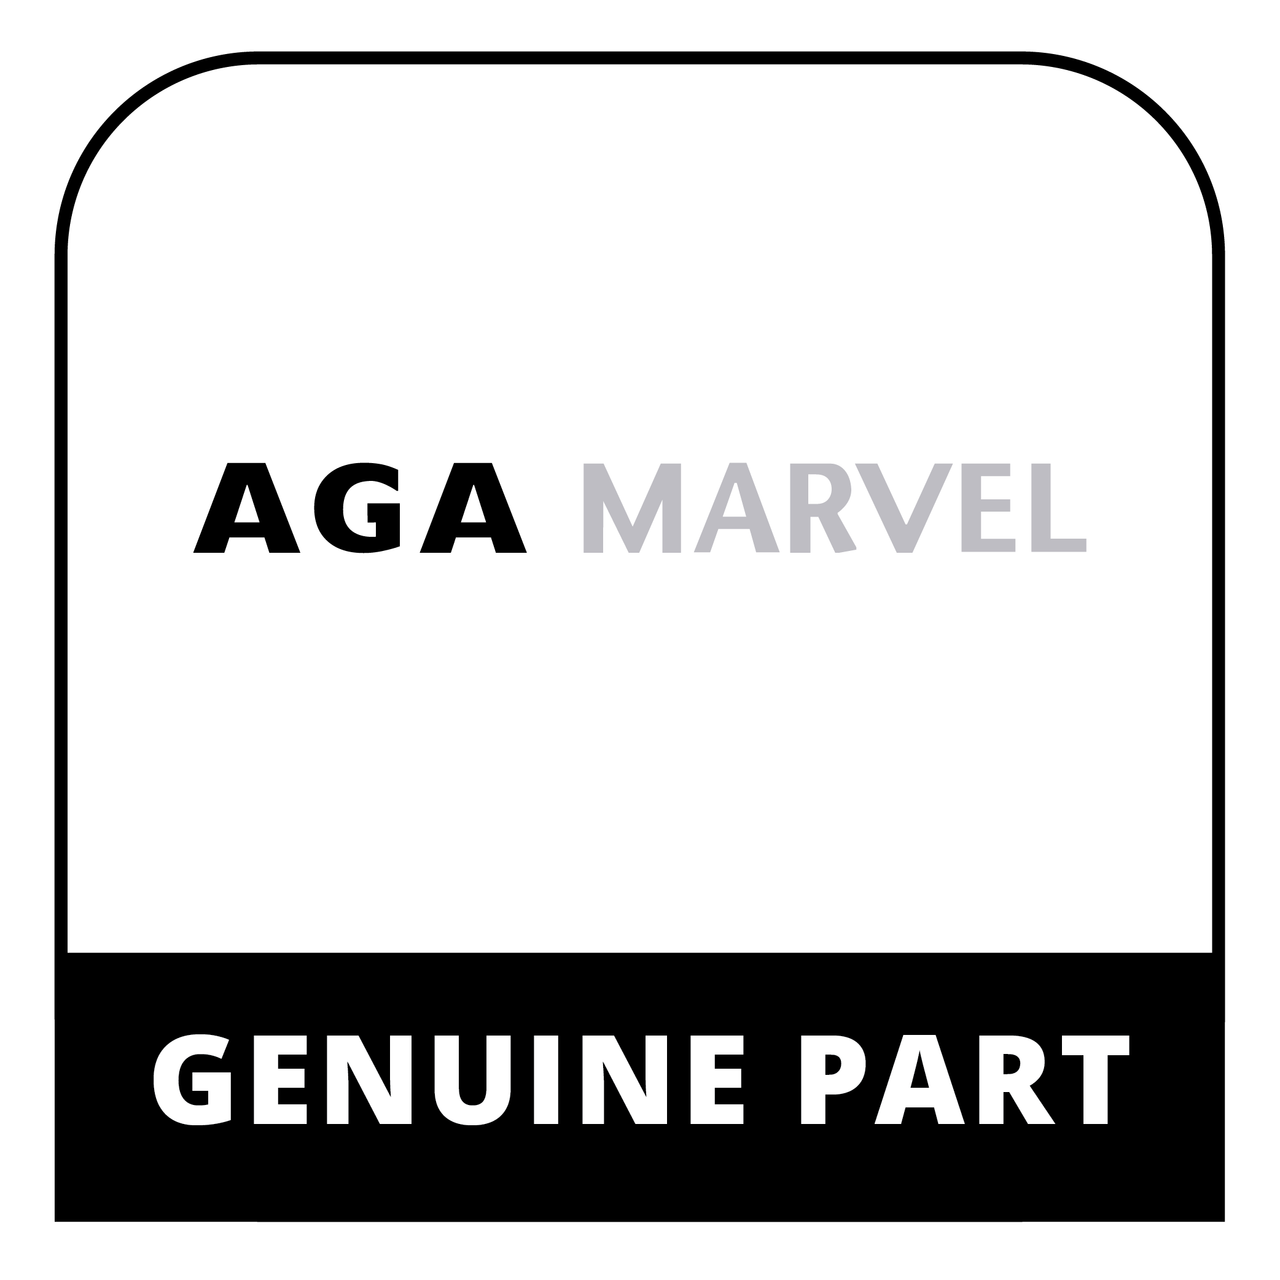 AGA Marvel 90-54076-01 - Freezer Shelf - Genuine AGA Marvel Part